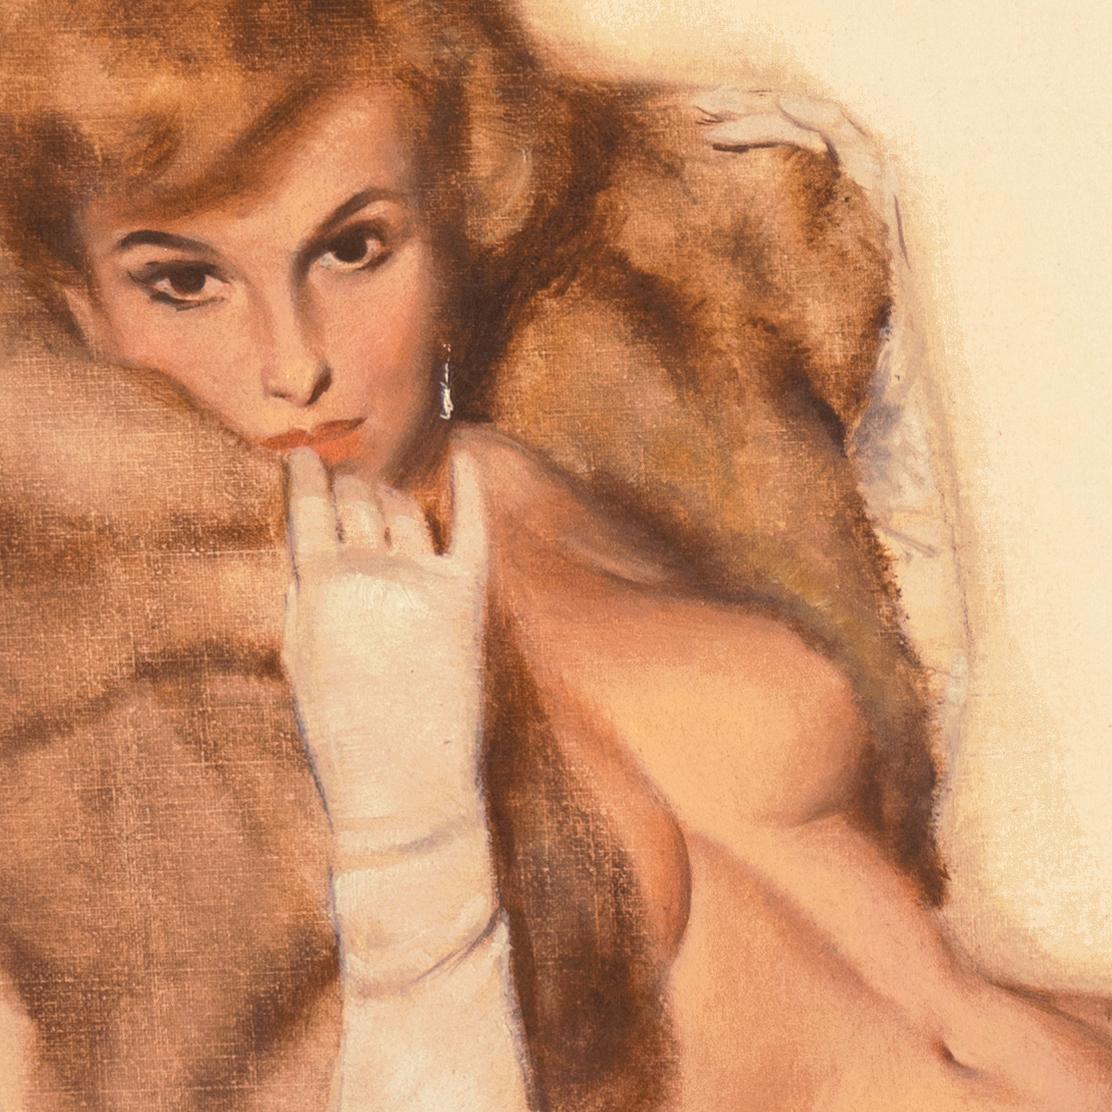 'Venus in Furs', American Pin-Up Illustration, Nude, Leopold von Sacher-Masoch 3